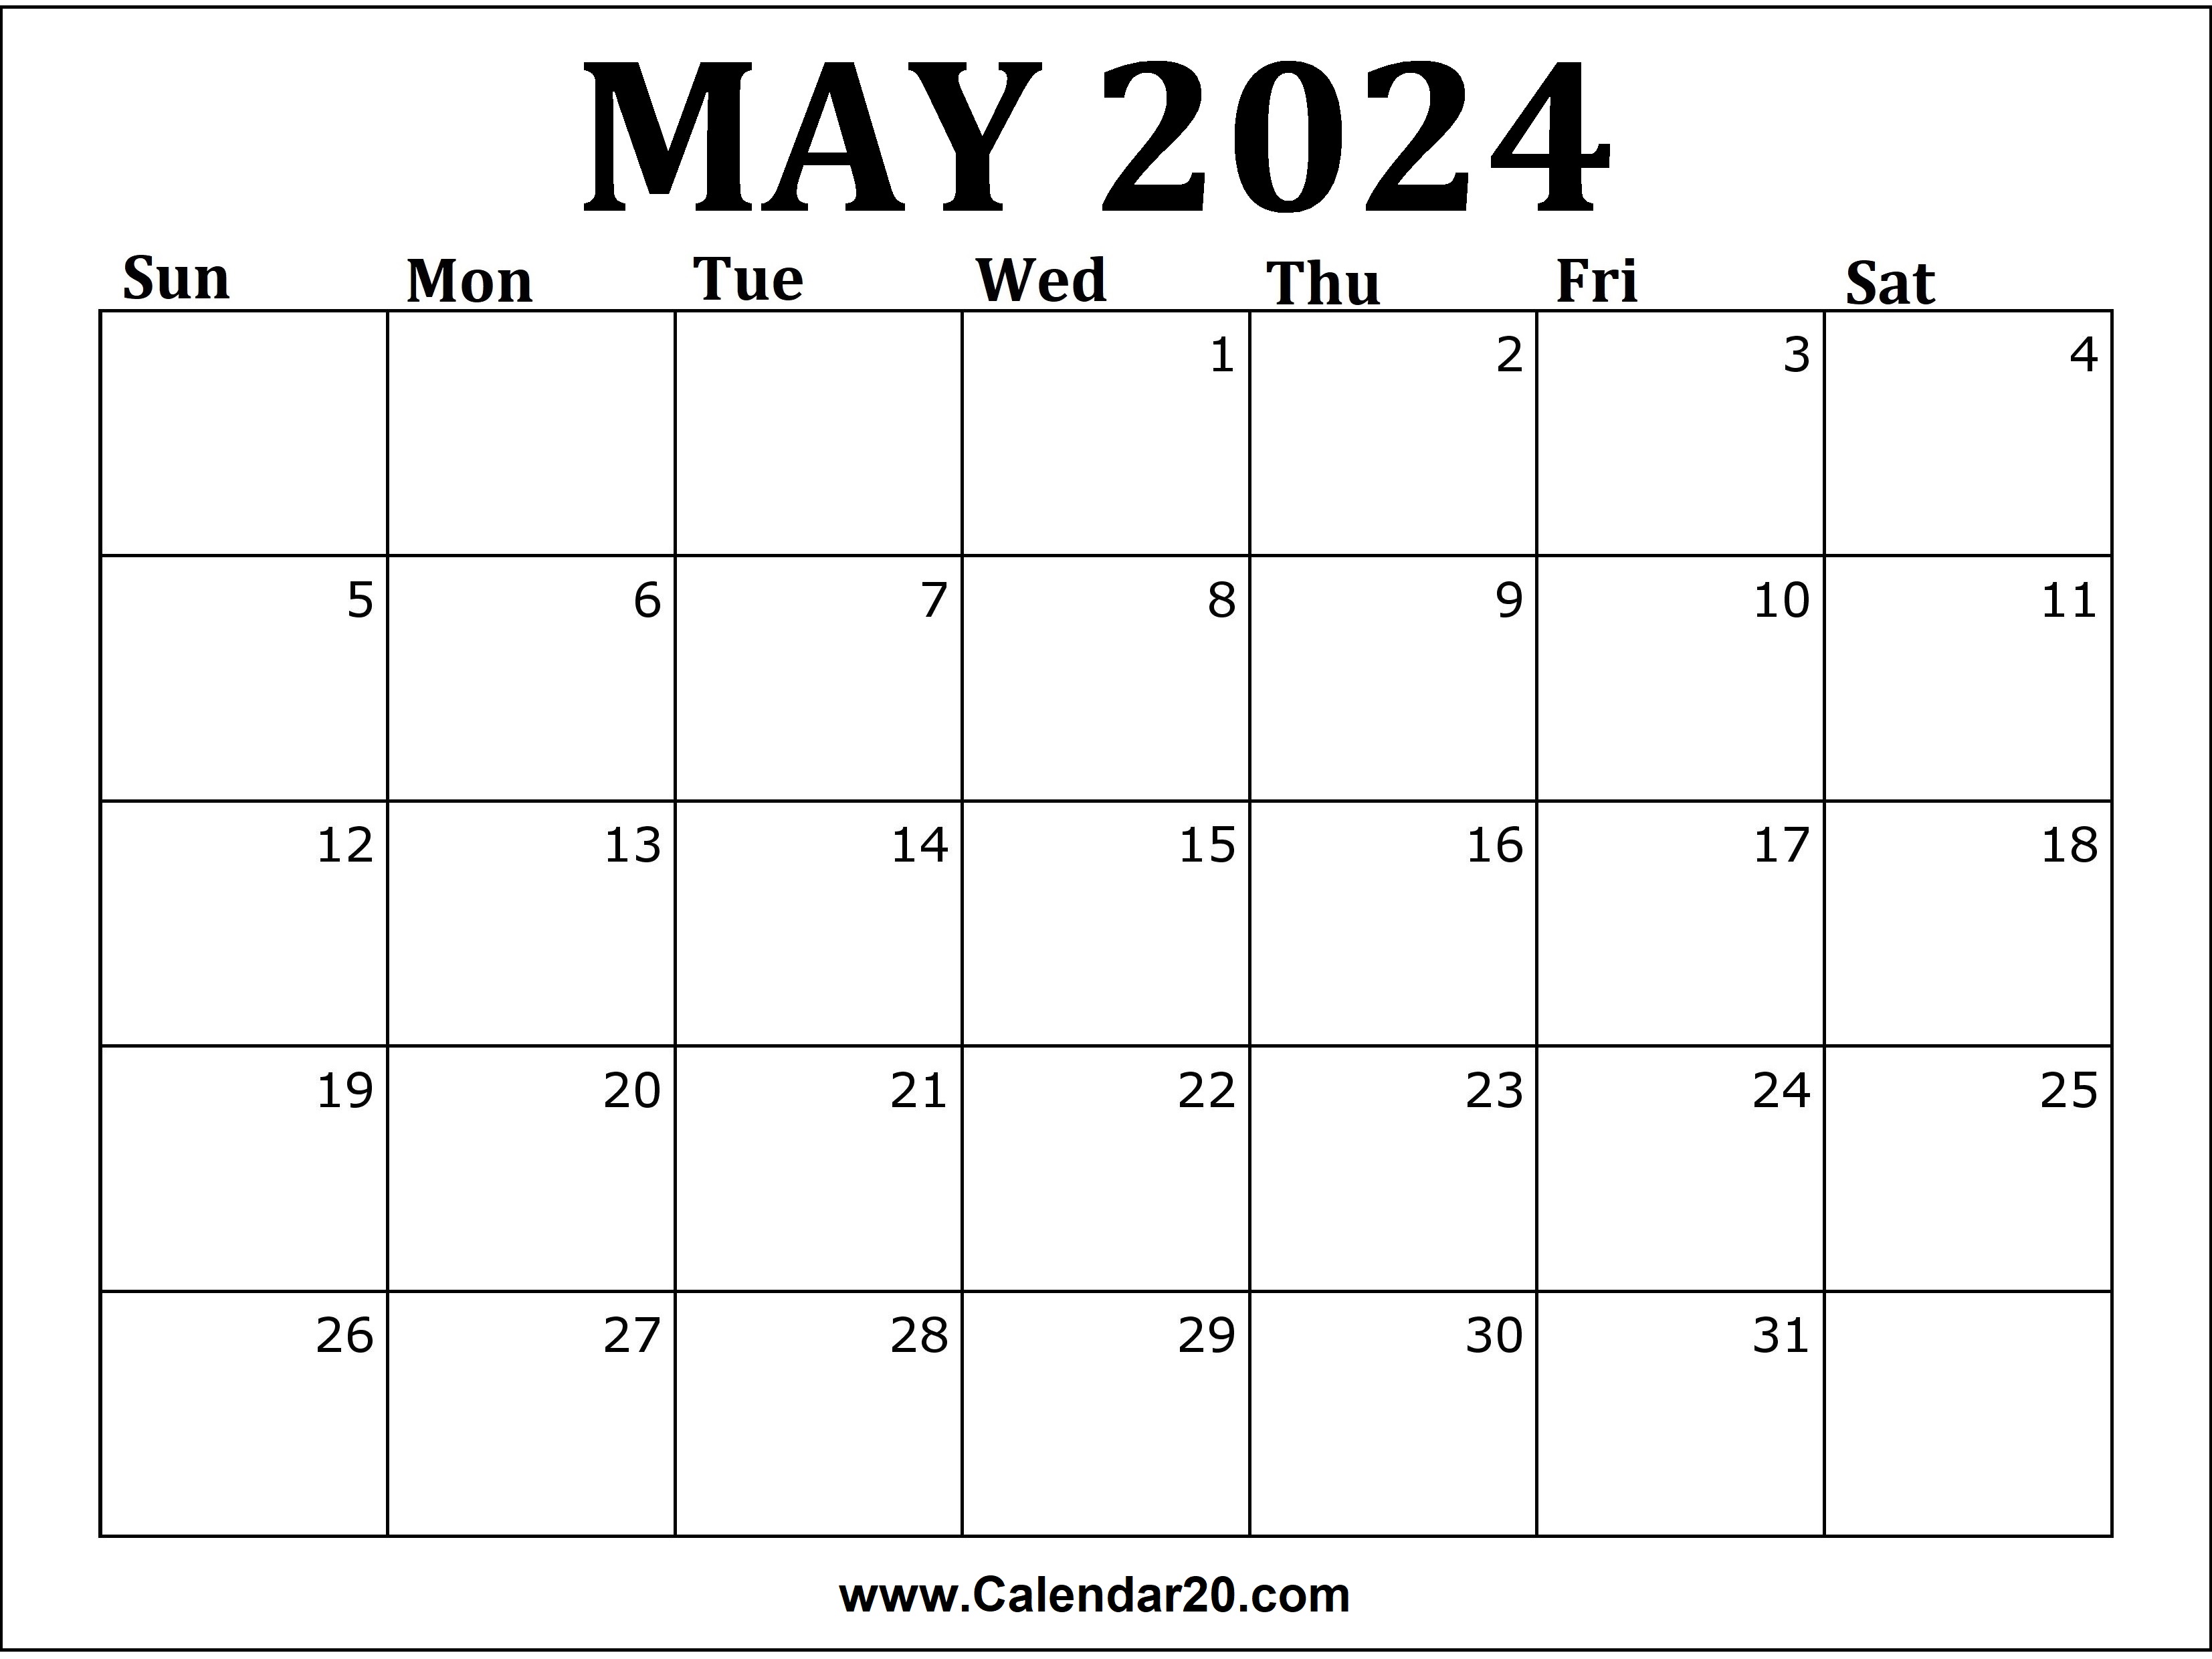 2024 May Calendar Wallpaper Desktop Themes Shae Yasmin